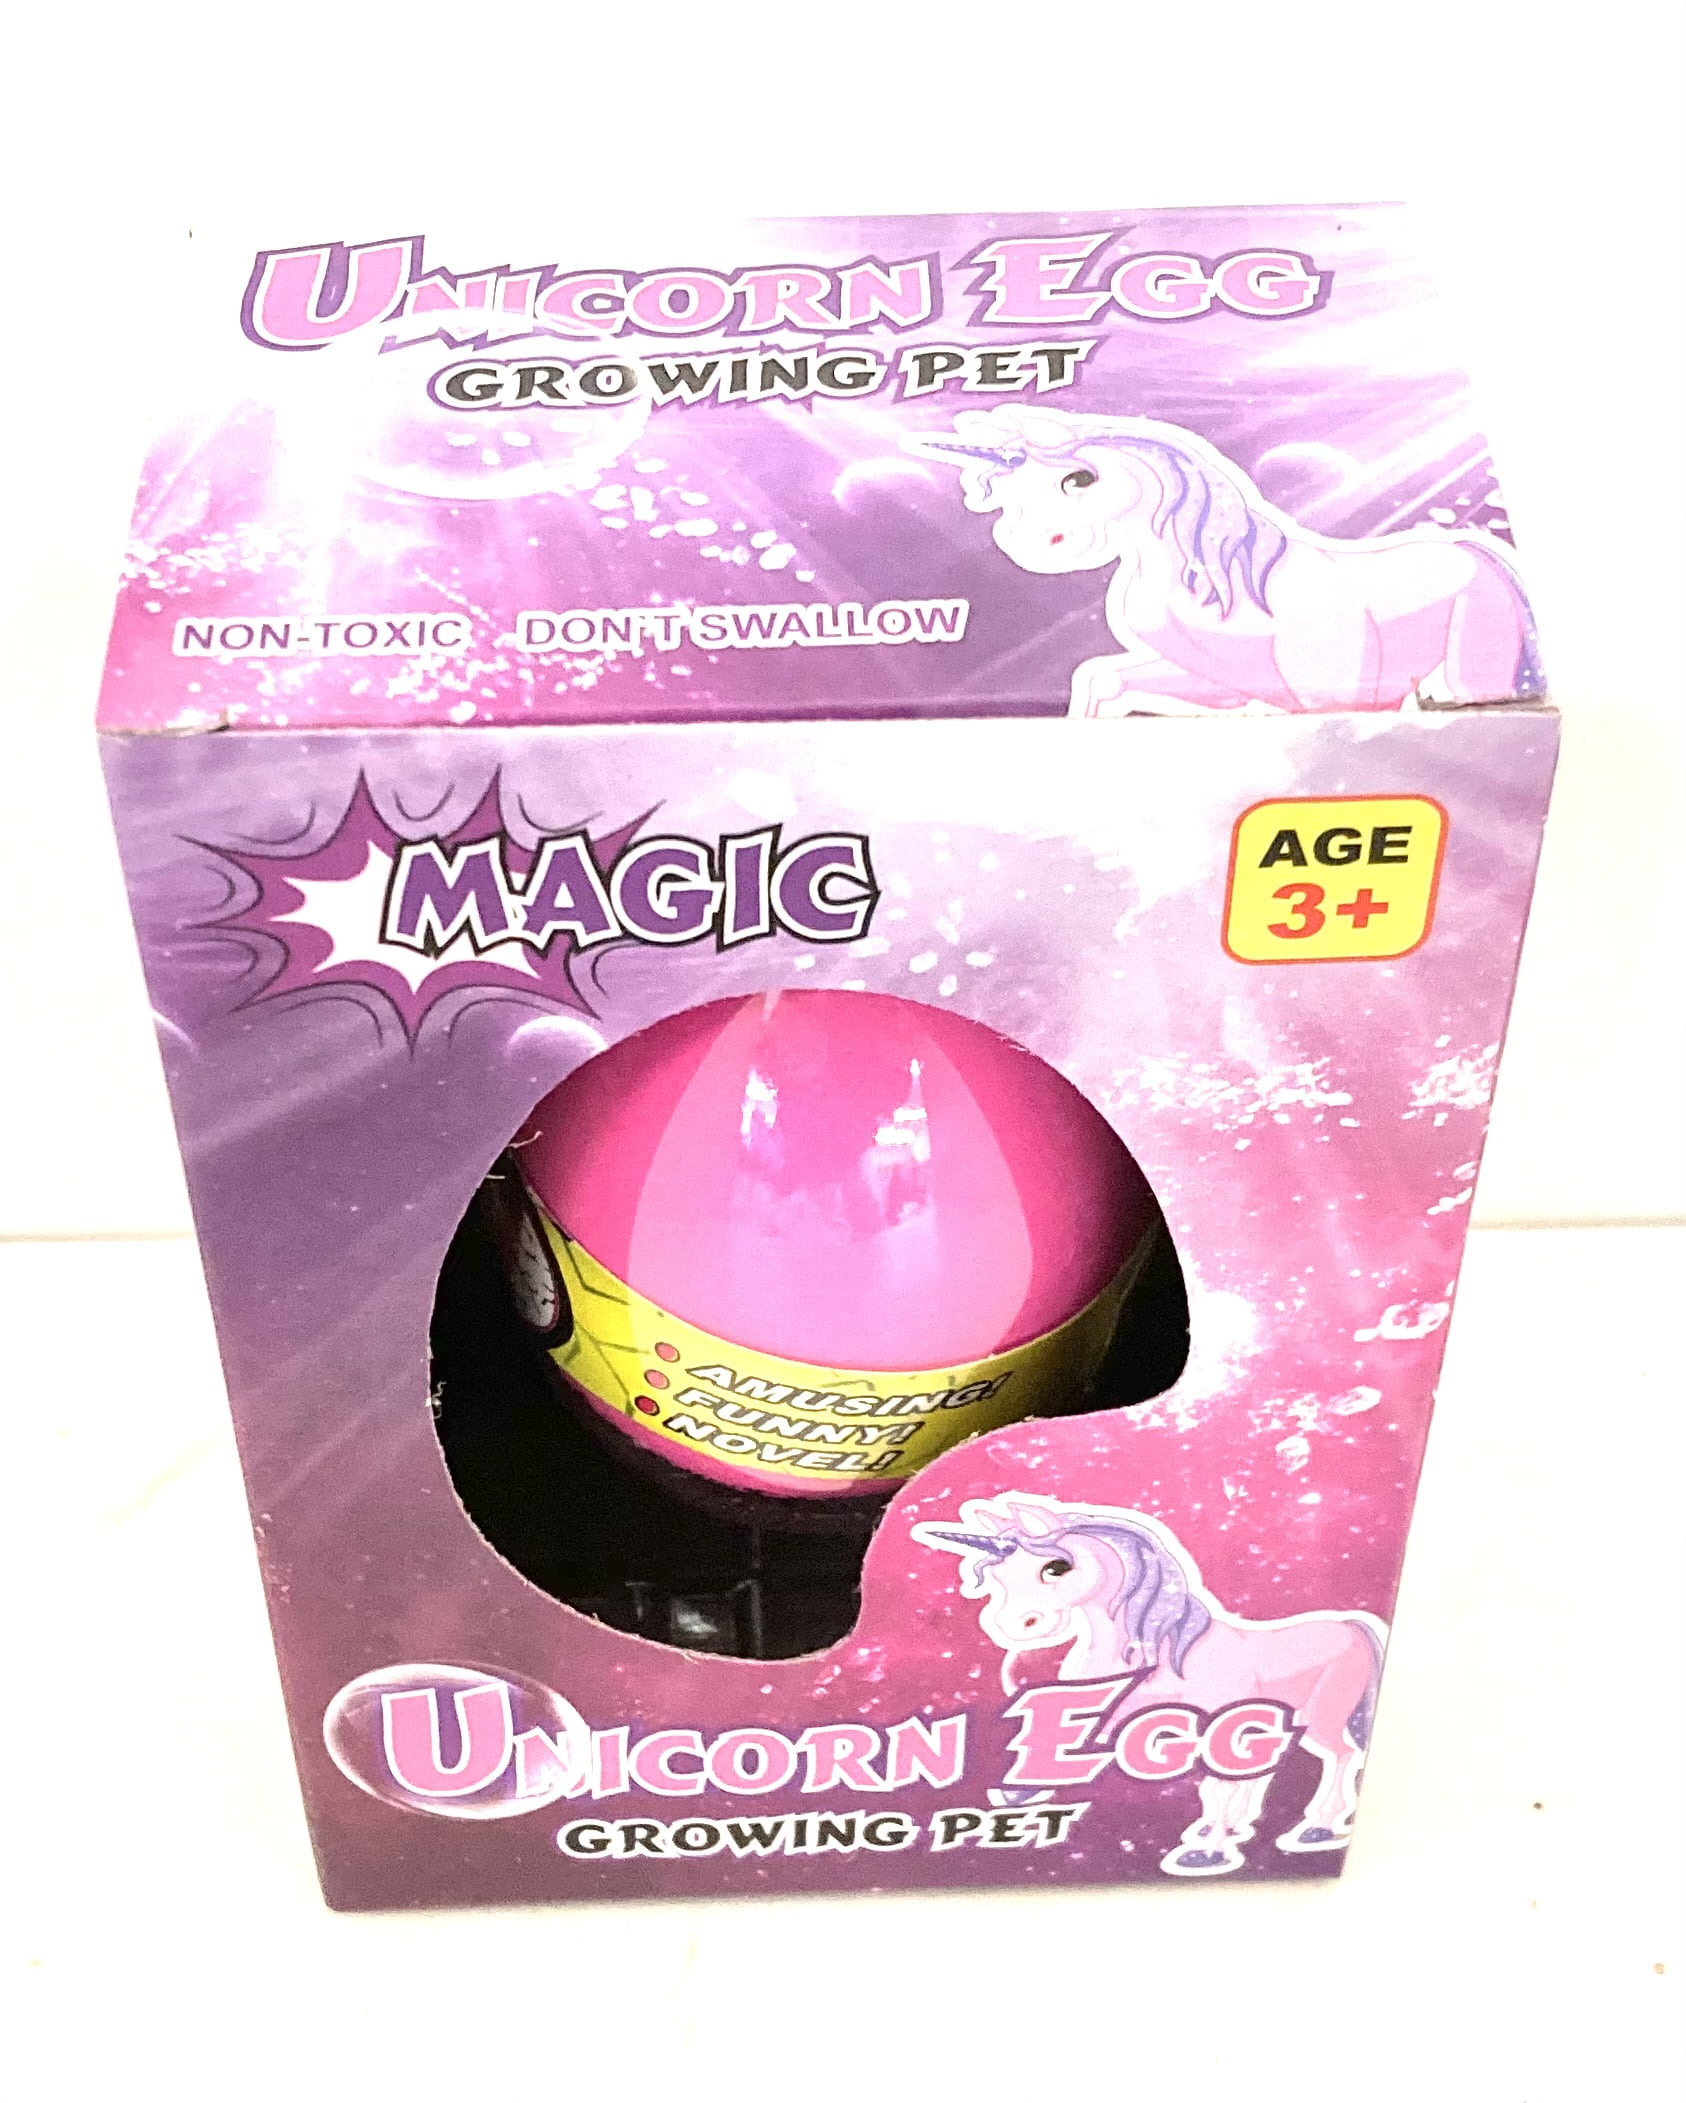 NEW Magic Unicorn Egg Growing Pet 